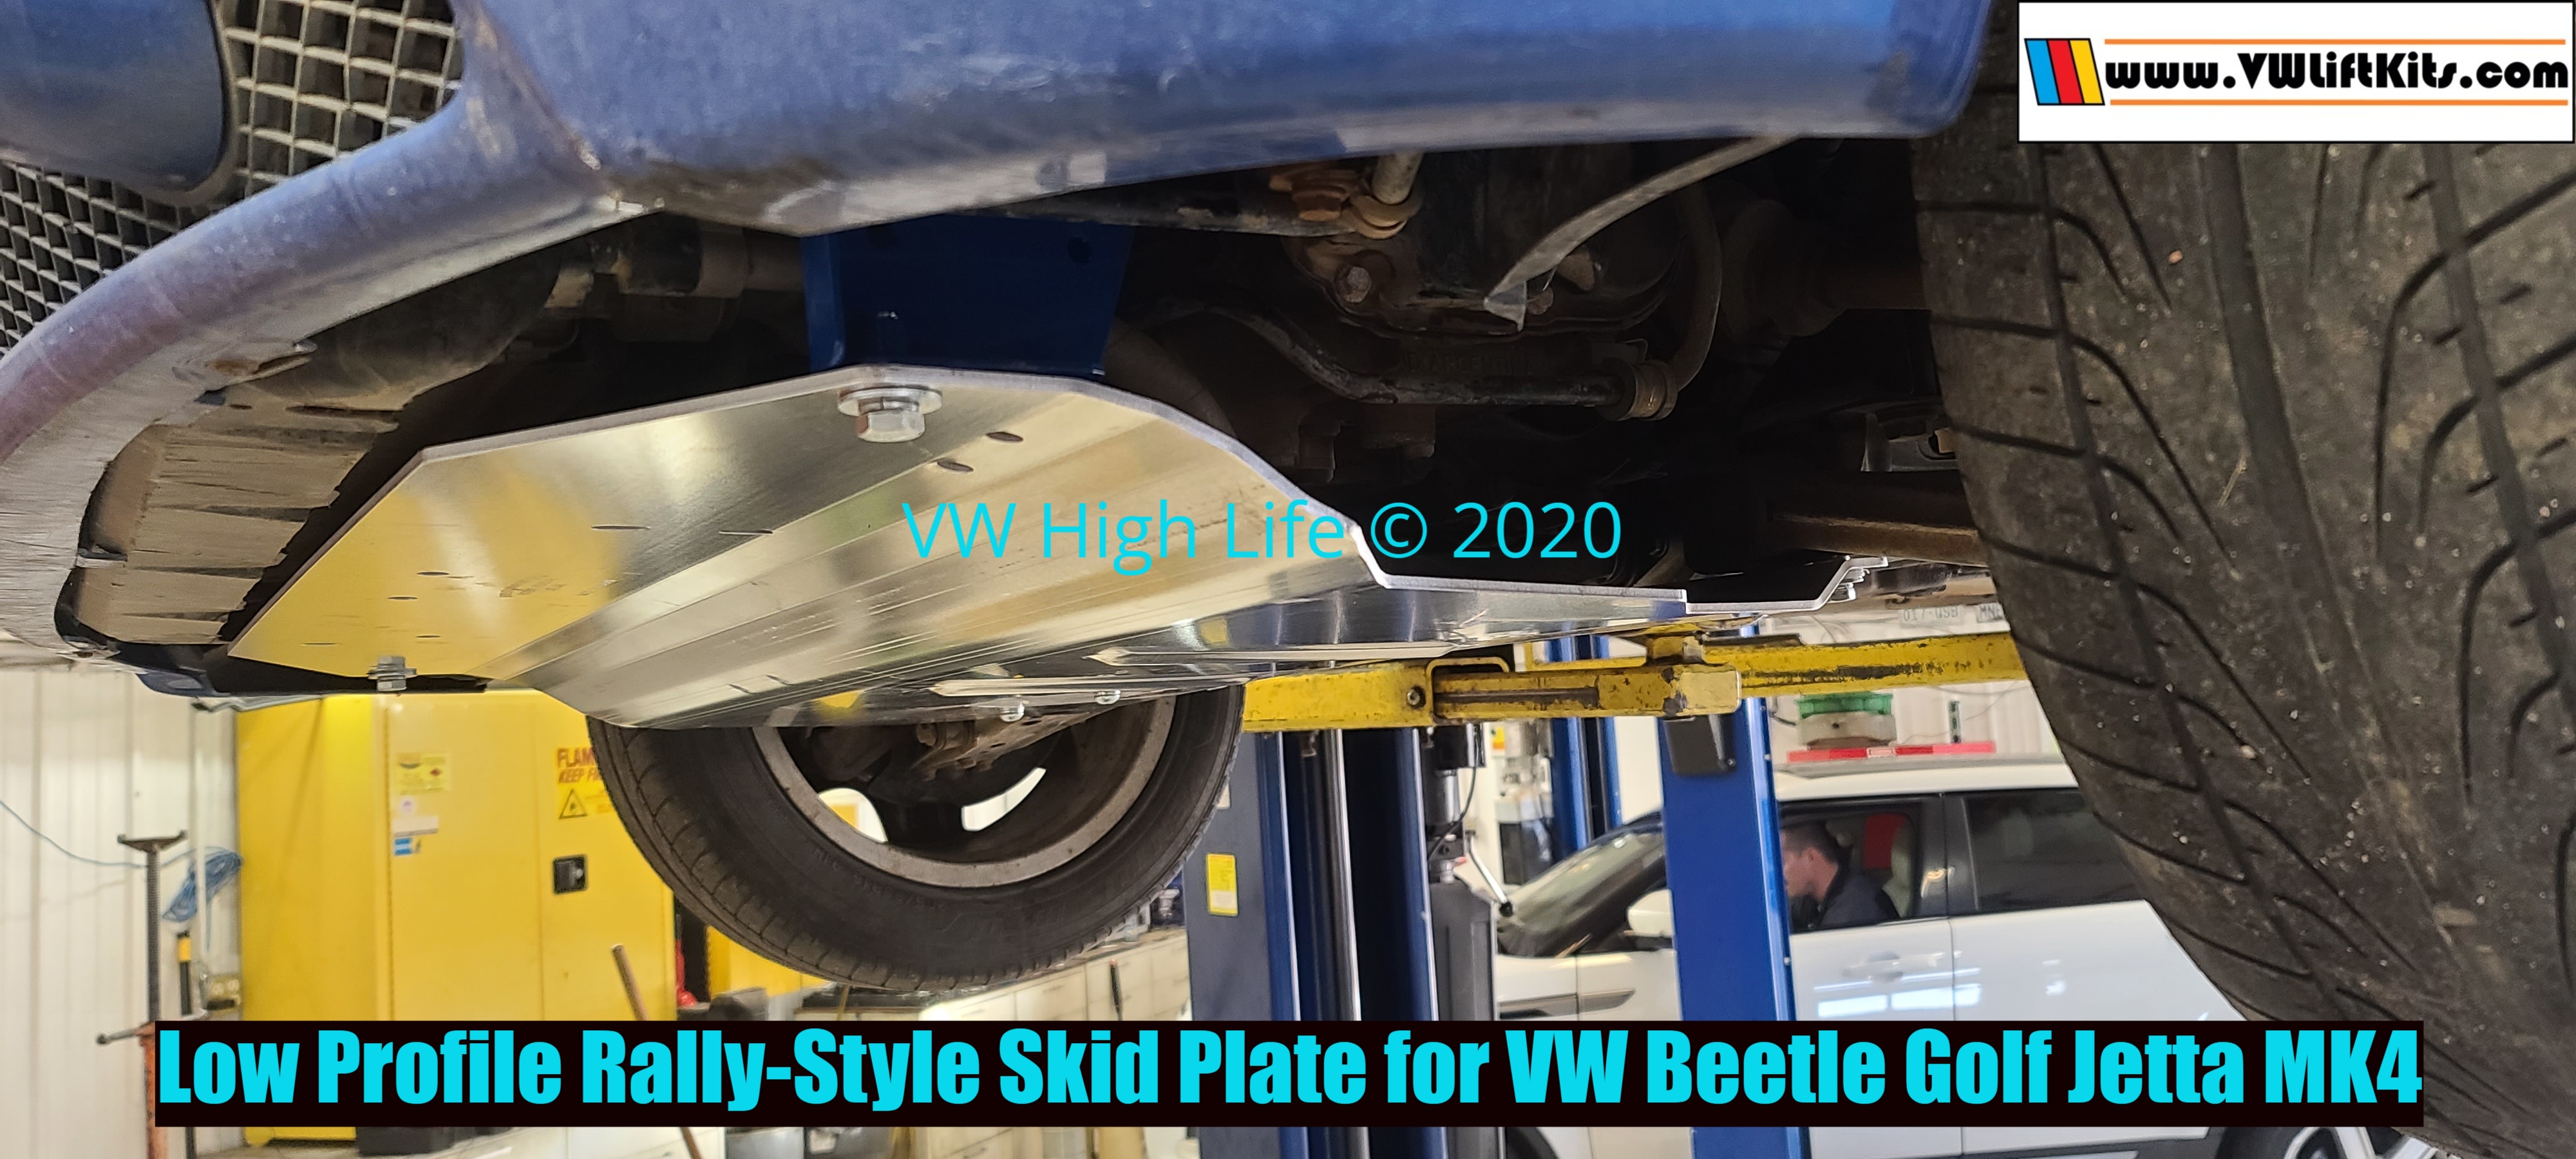 Low Profile Heavy Duty Rally-Style Skid Plate for VW Beetle Golf Jetta MK4. We ship worldwide!